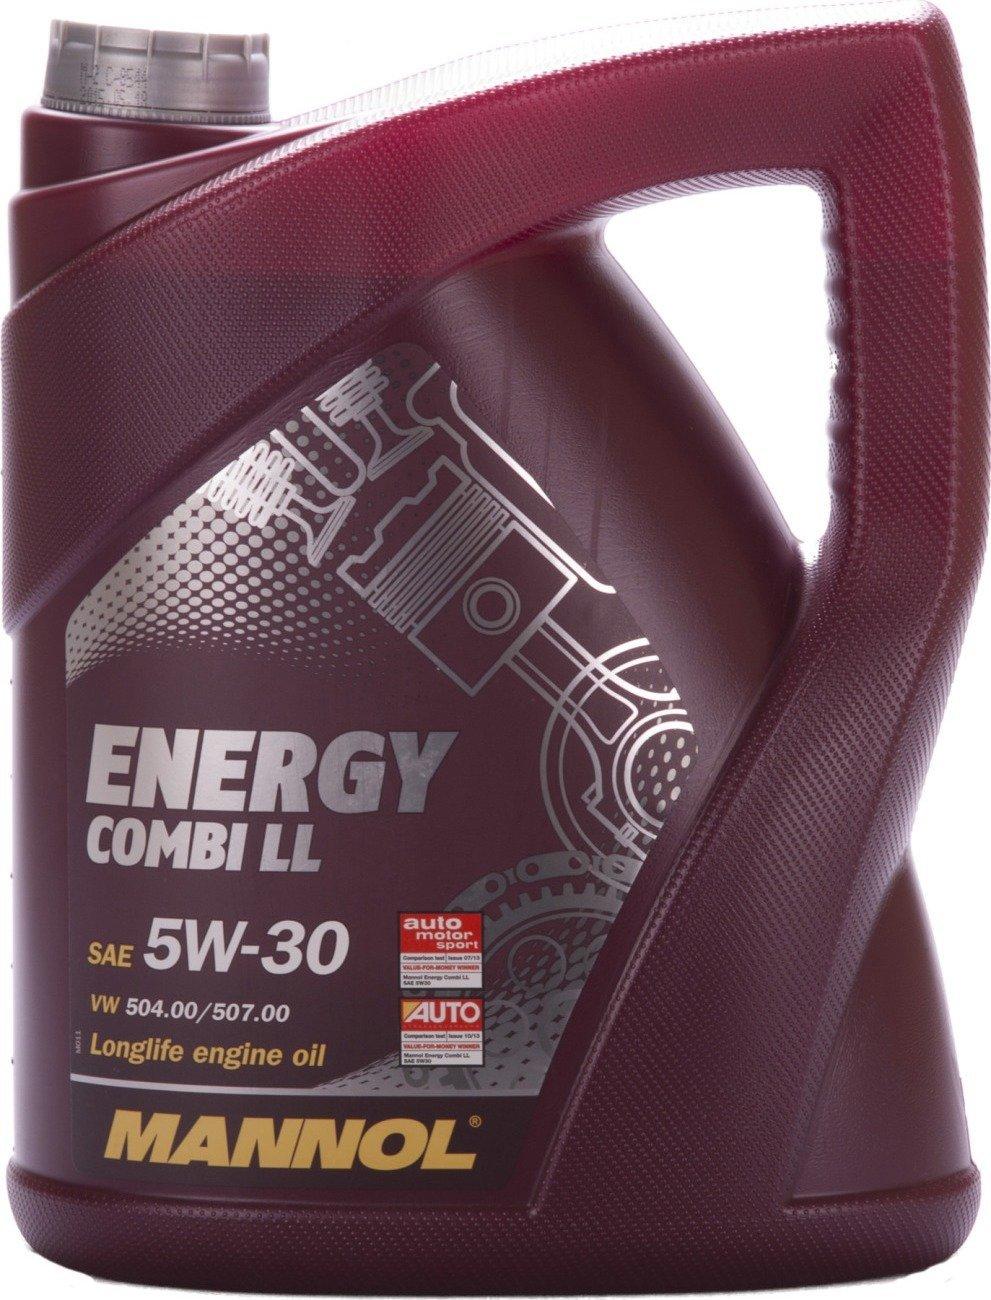 Mannol Energy Combi LL 5W-30 (5 l) Erfahrungen 4.4/5 Sternen